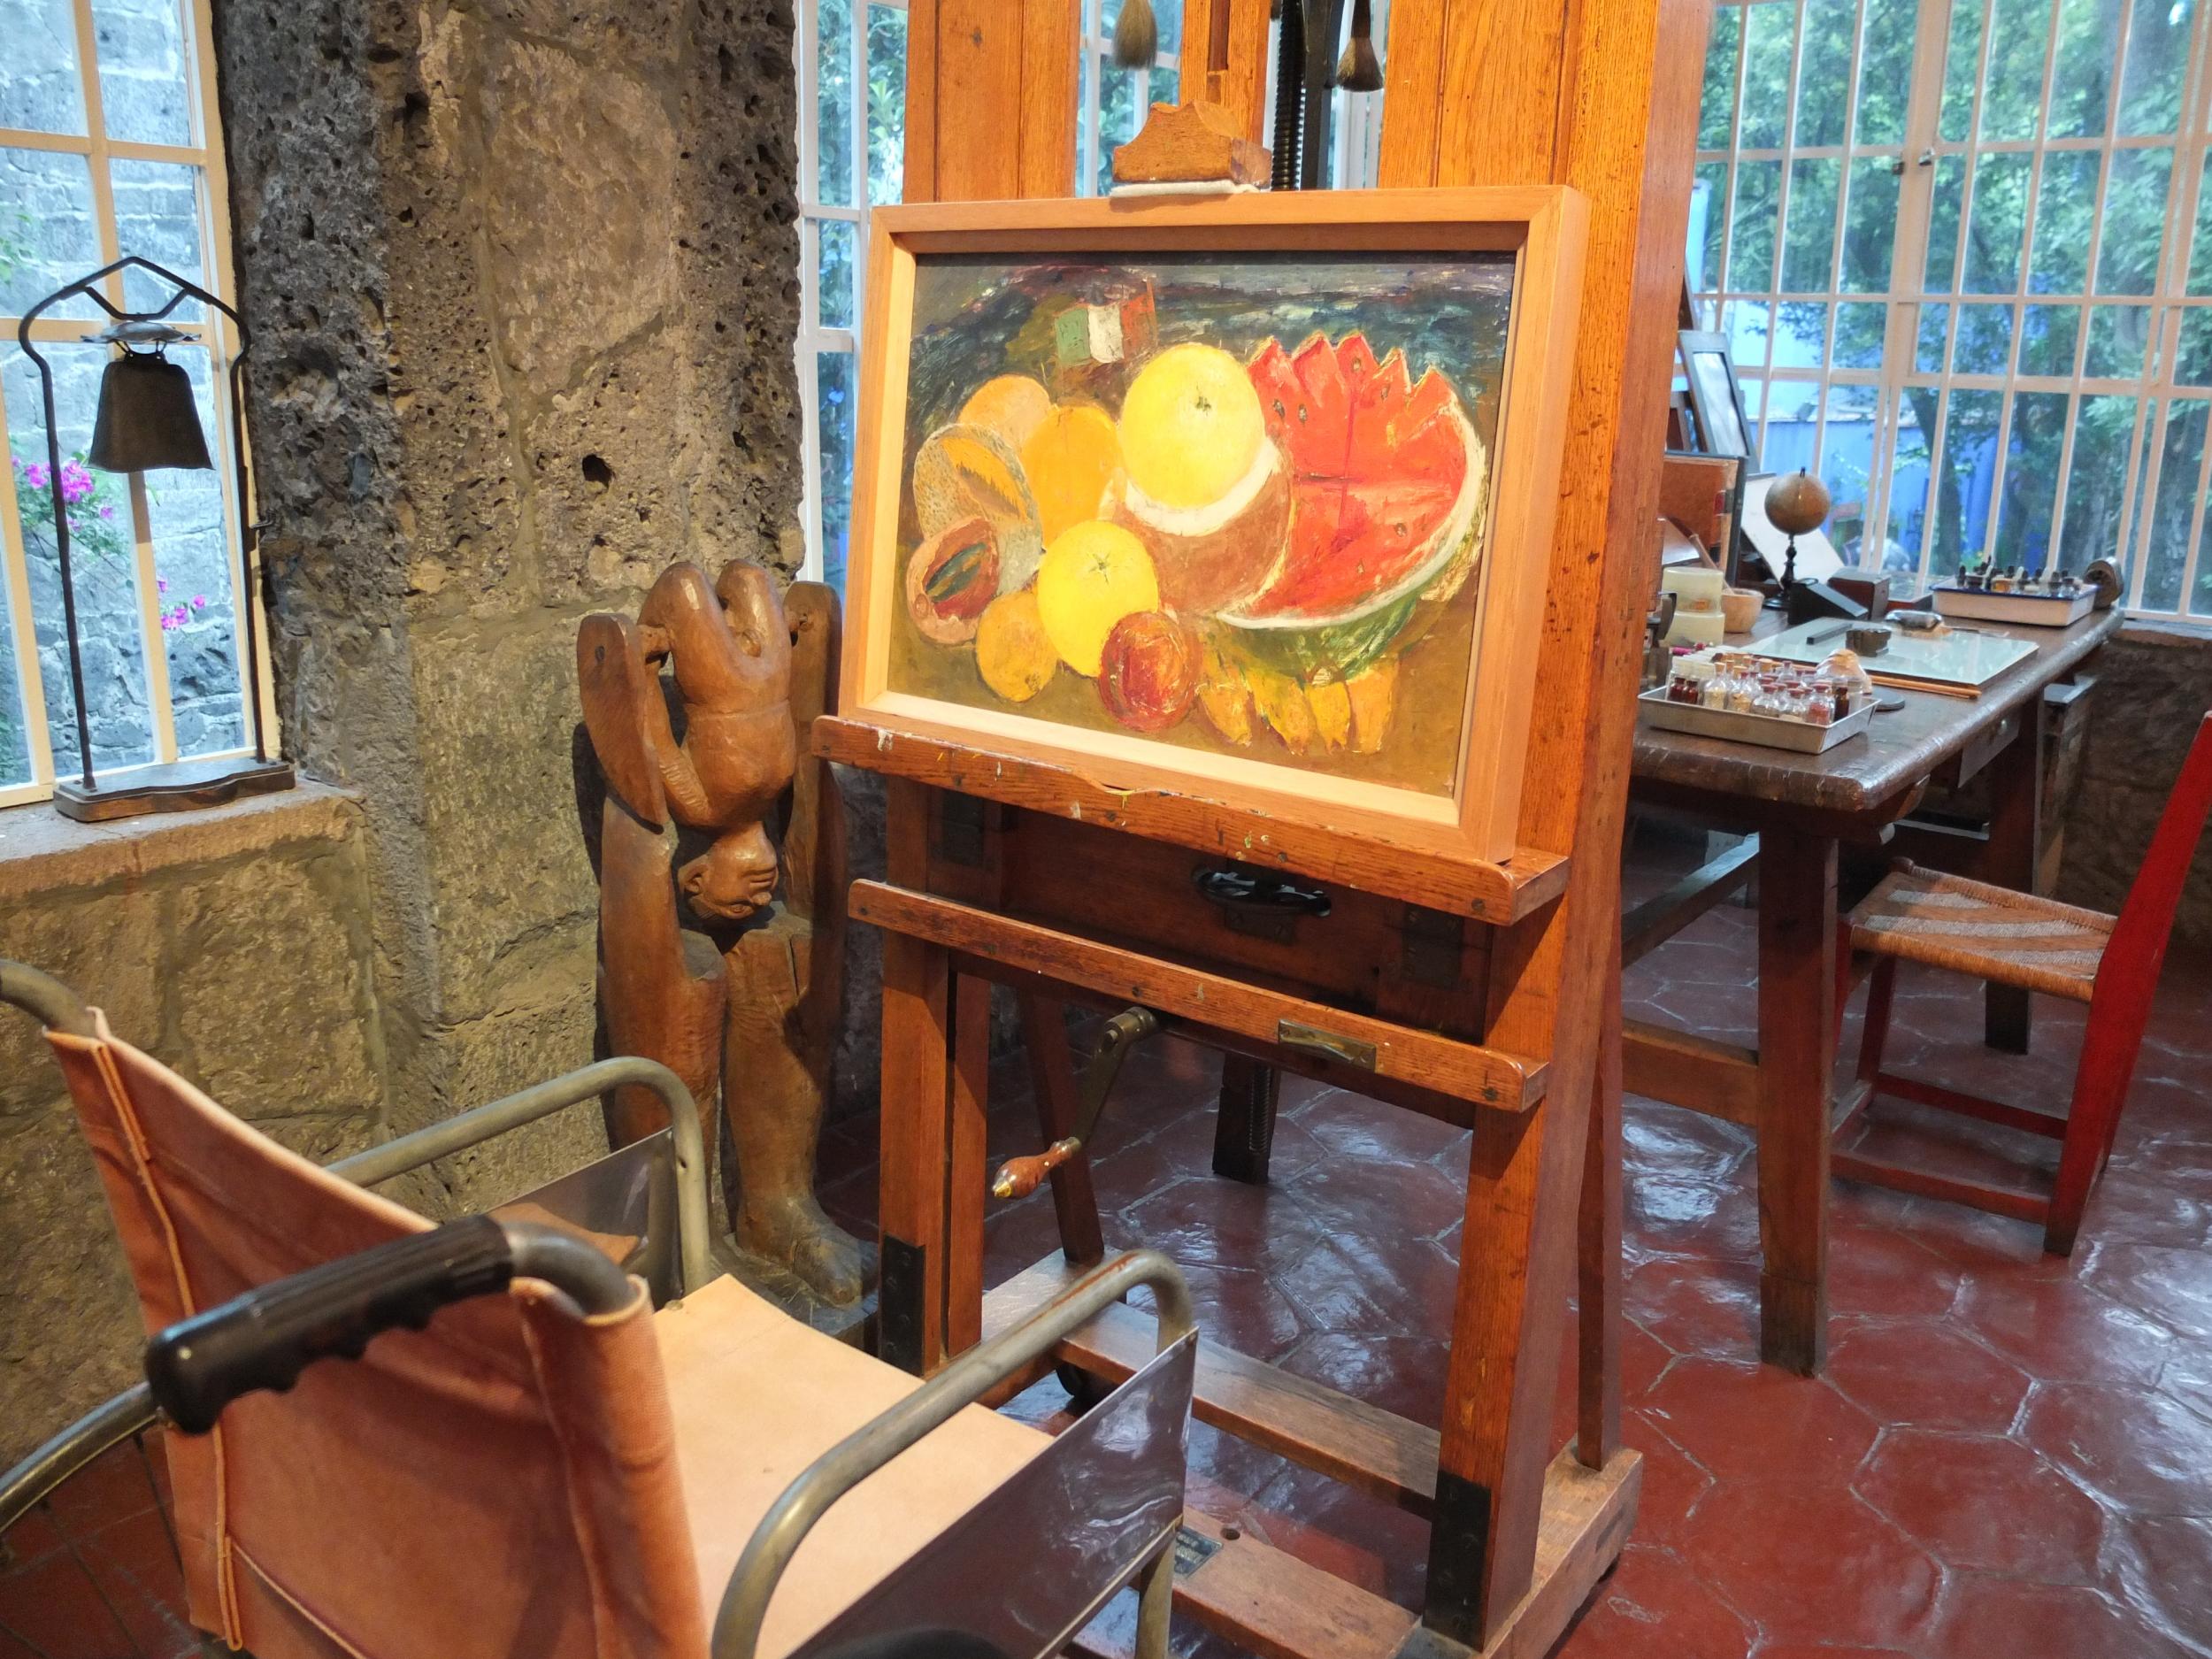 Frida's studio at the Casa Azul